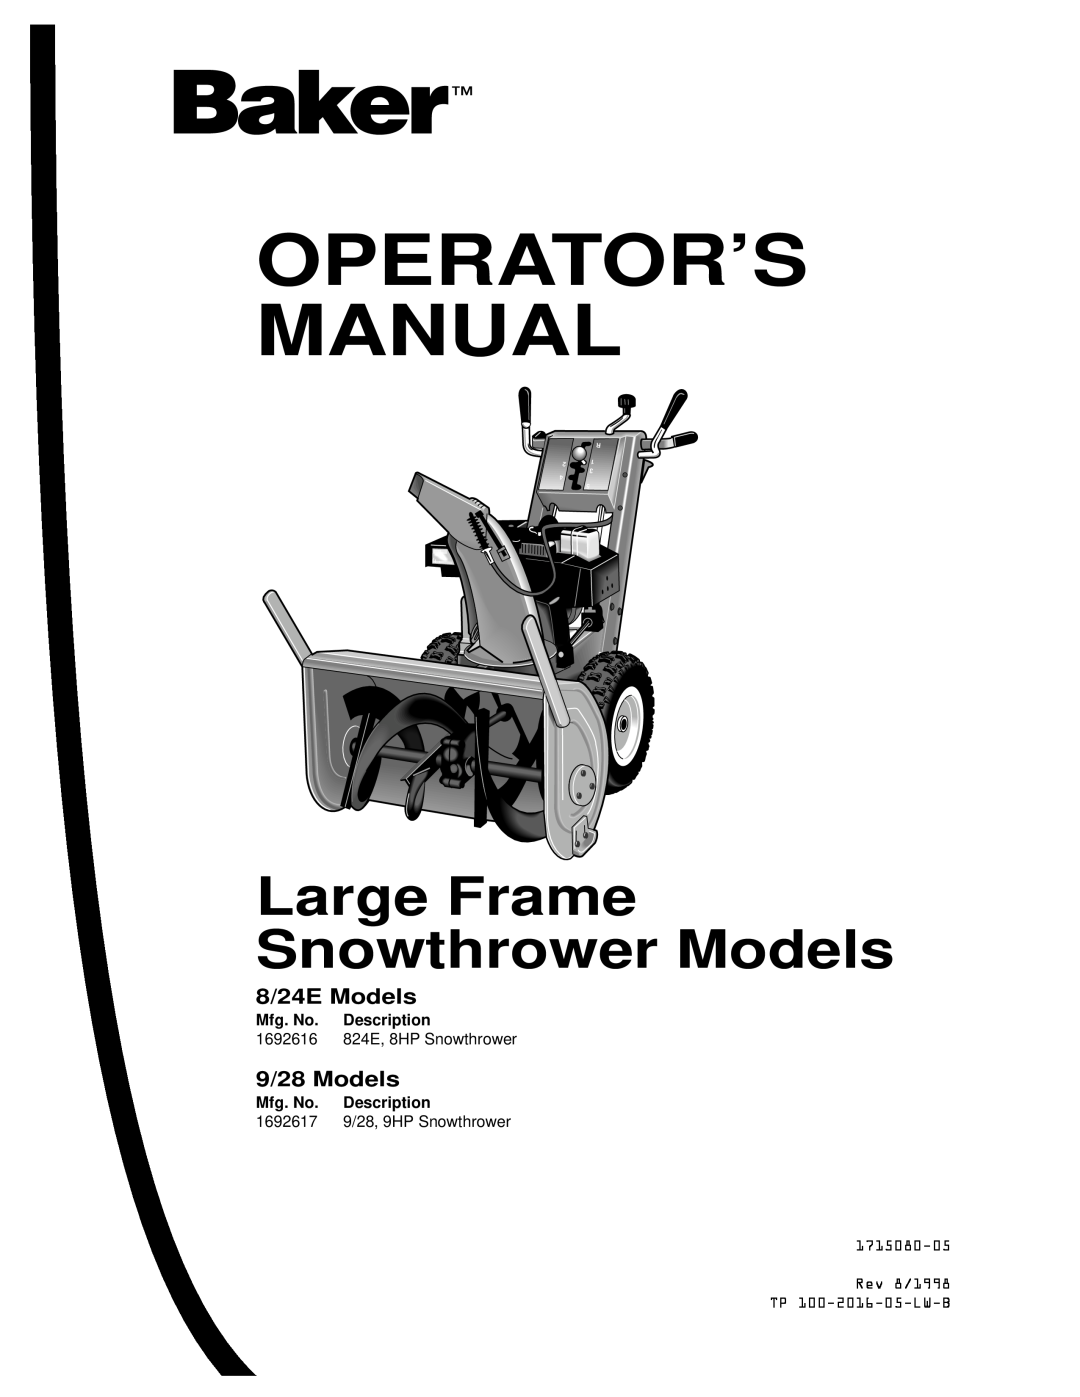 Simplicity 1691899, 1692469, 1692570, 1692569 8/24E Models, 9/28 Models, Operator’S Manual, Large Frame Snowthrower Models 